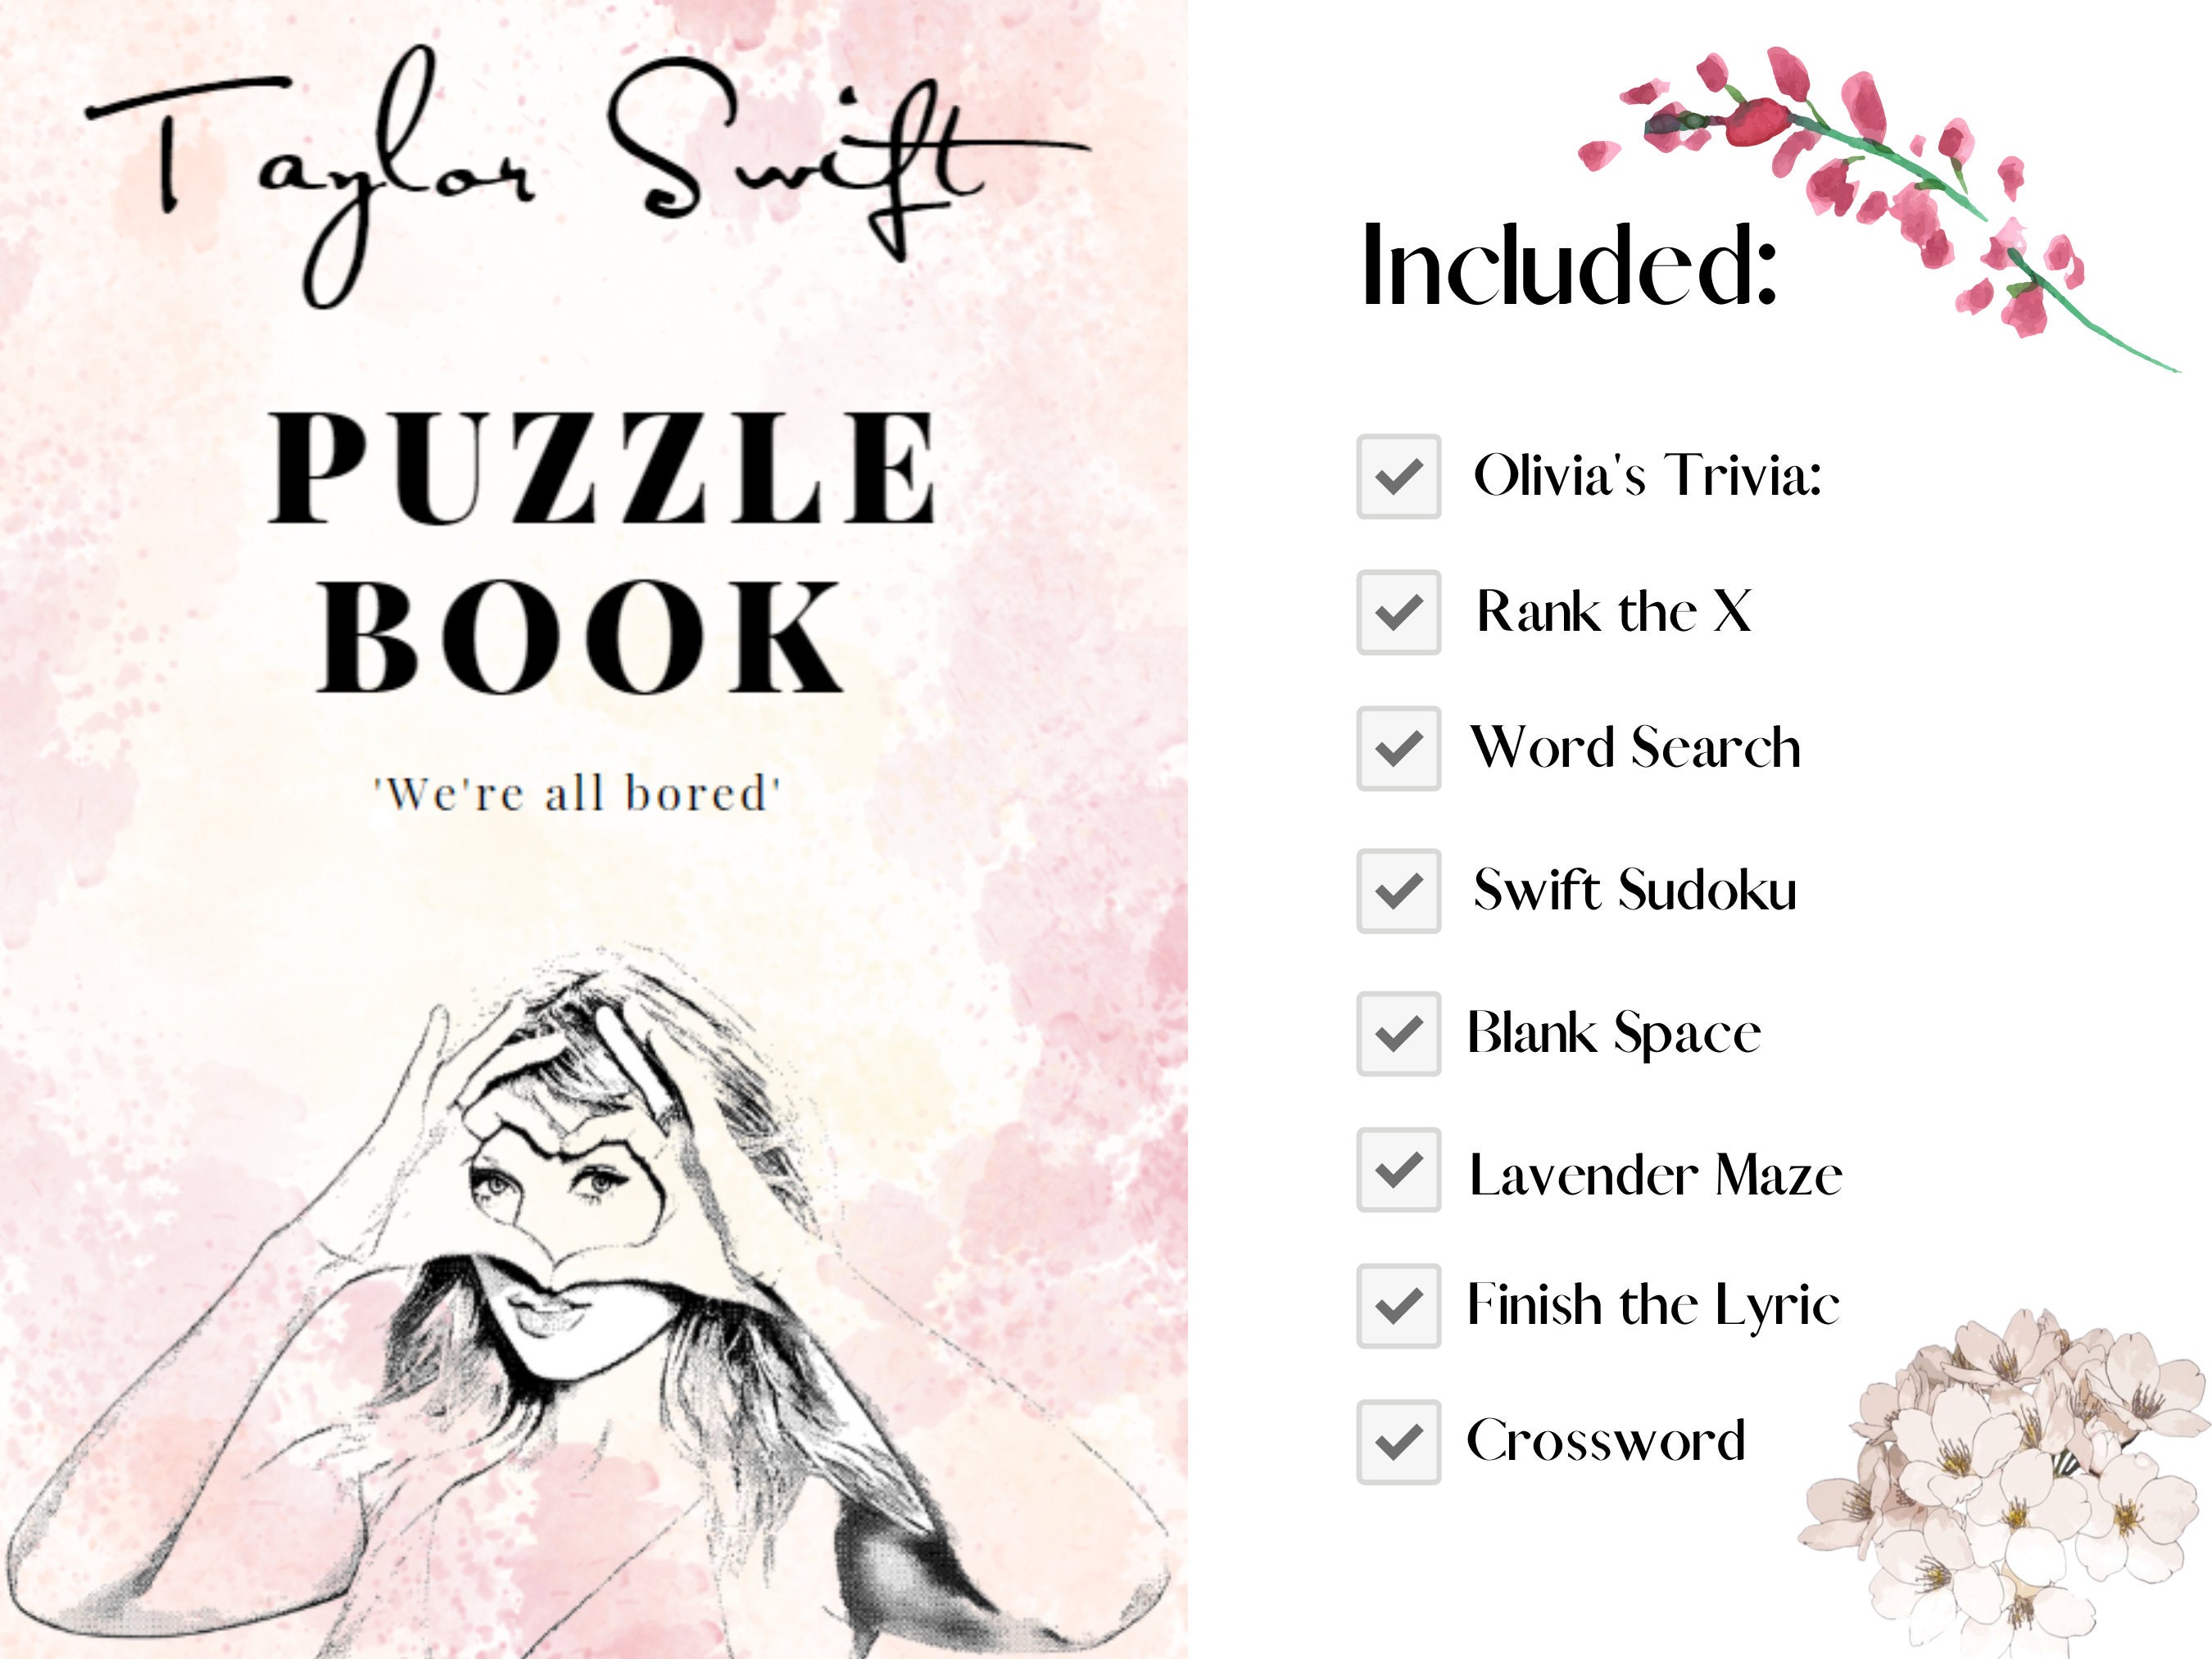 Screen-Free Gift Ideas: Taylor Swift Book, Squishmallow, Escape